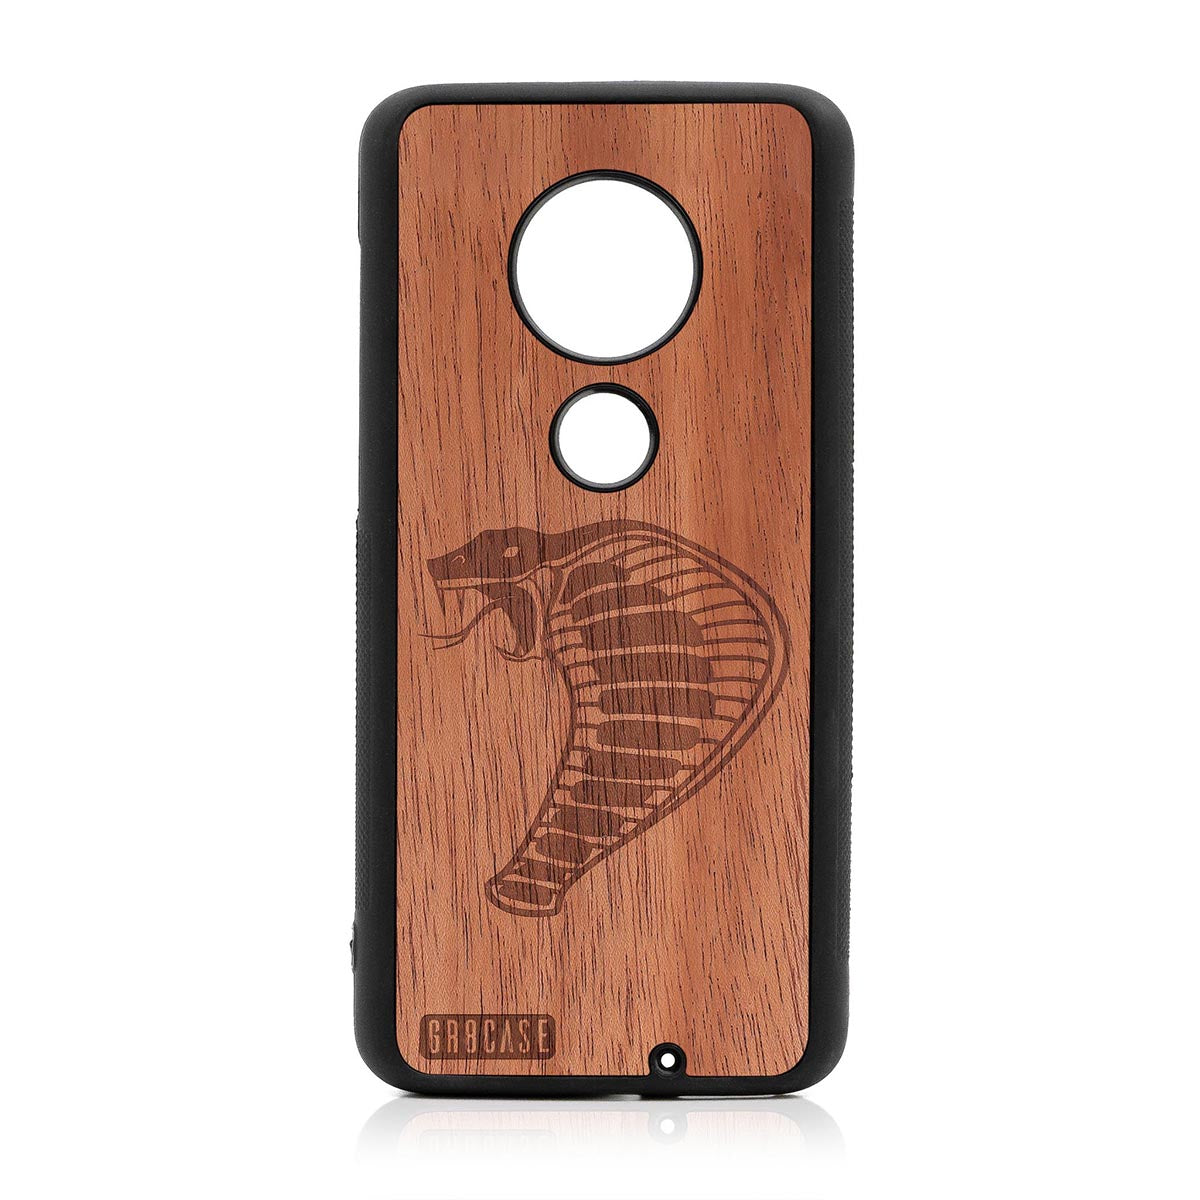 Cobra Design Wood Case For Moto G7 Plus by GR8CASE